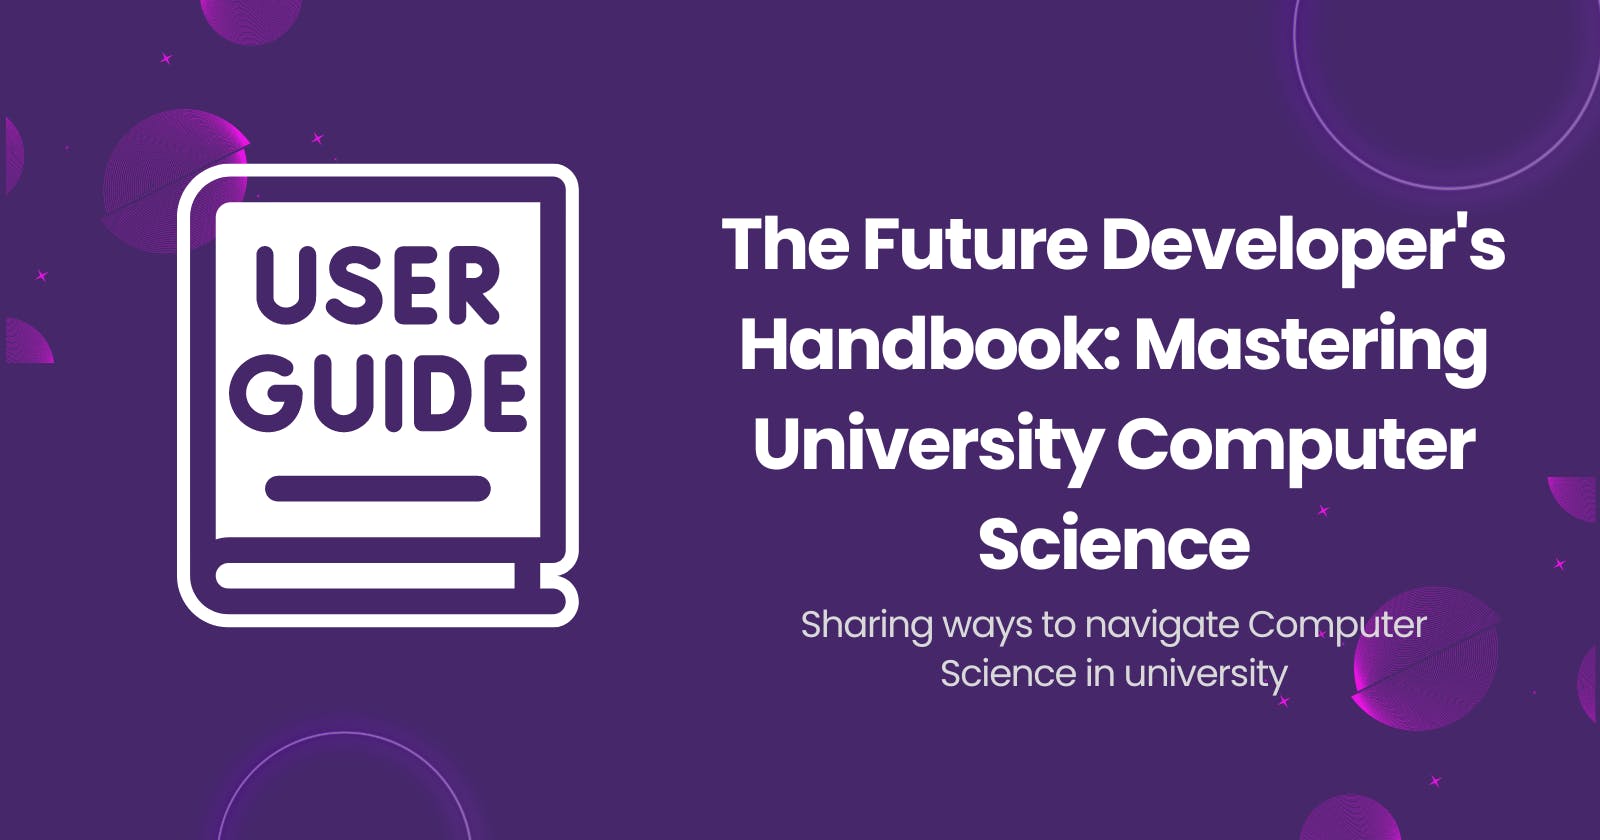 The Future Developer's Handbook: Mastering University Computer Science